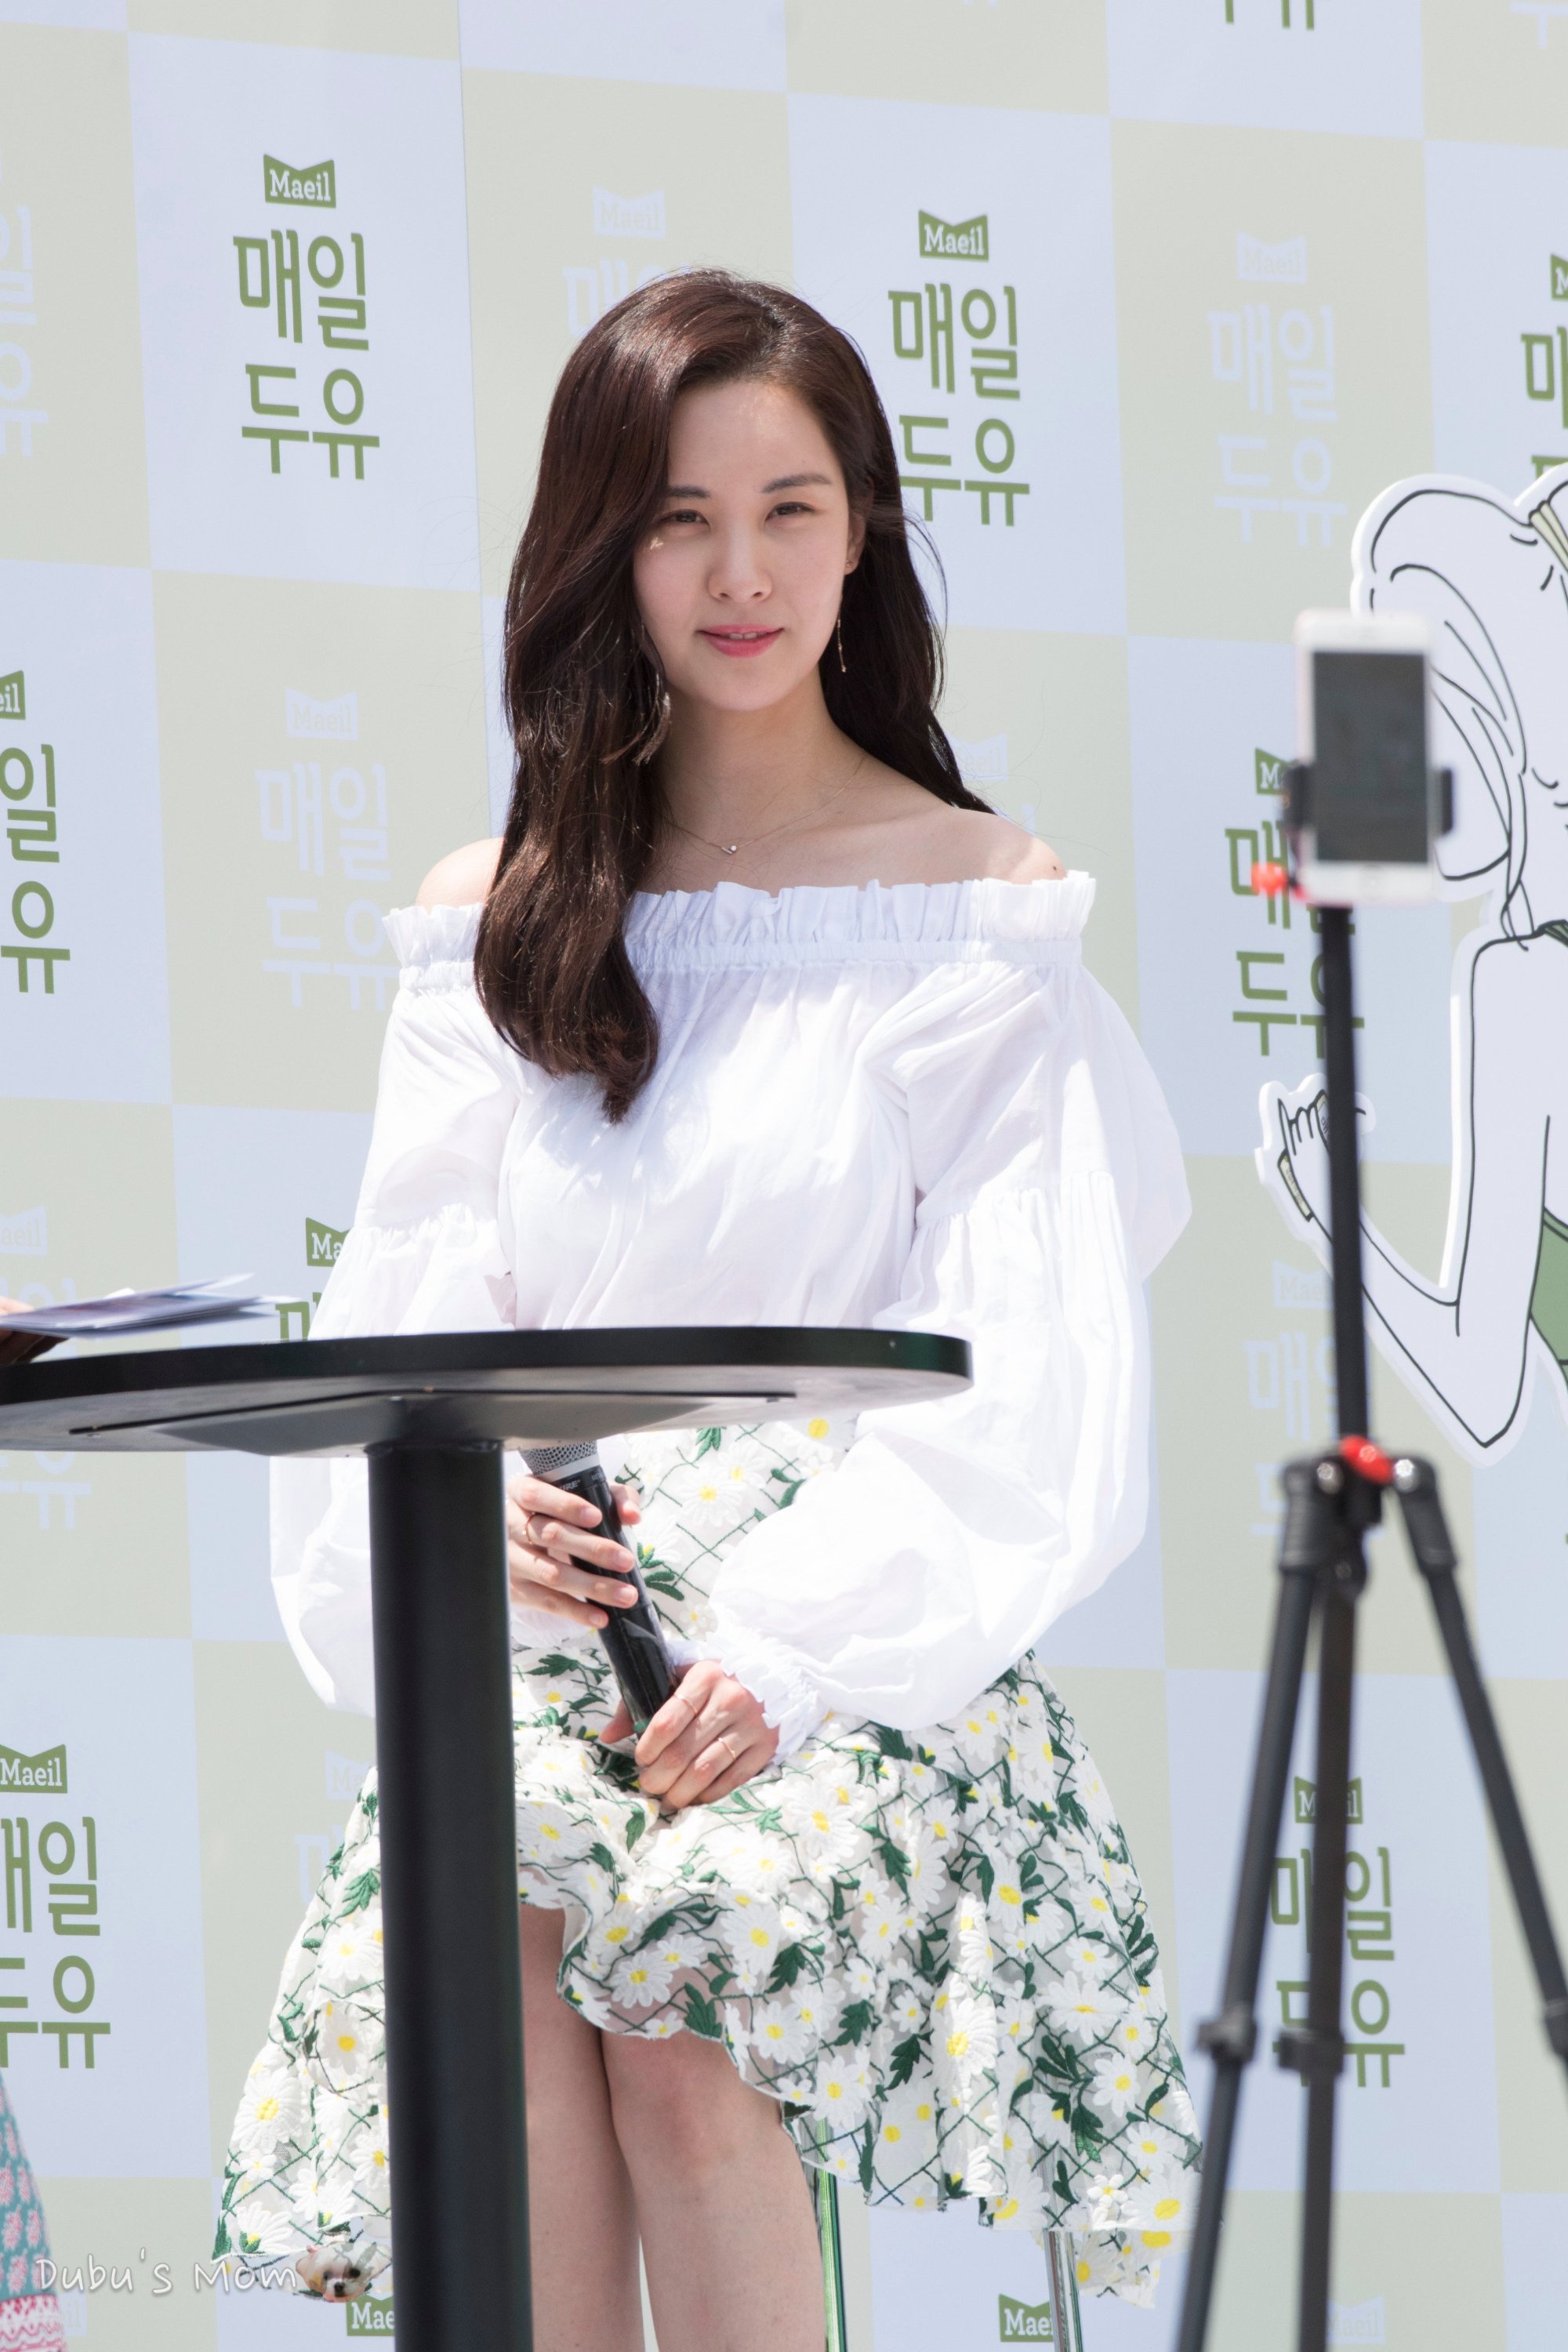  [PIC][03-06-2017]SeoHyun tham dự sự kiện “City Forestival - Maeil Duyou 'Confidence Diary'” vào chiều nay - Page 2 PO38epI3c3-3000x3000